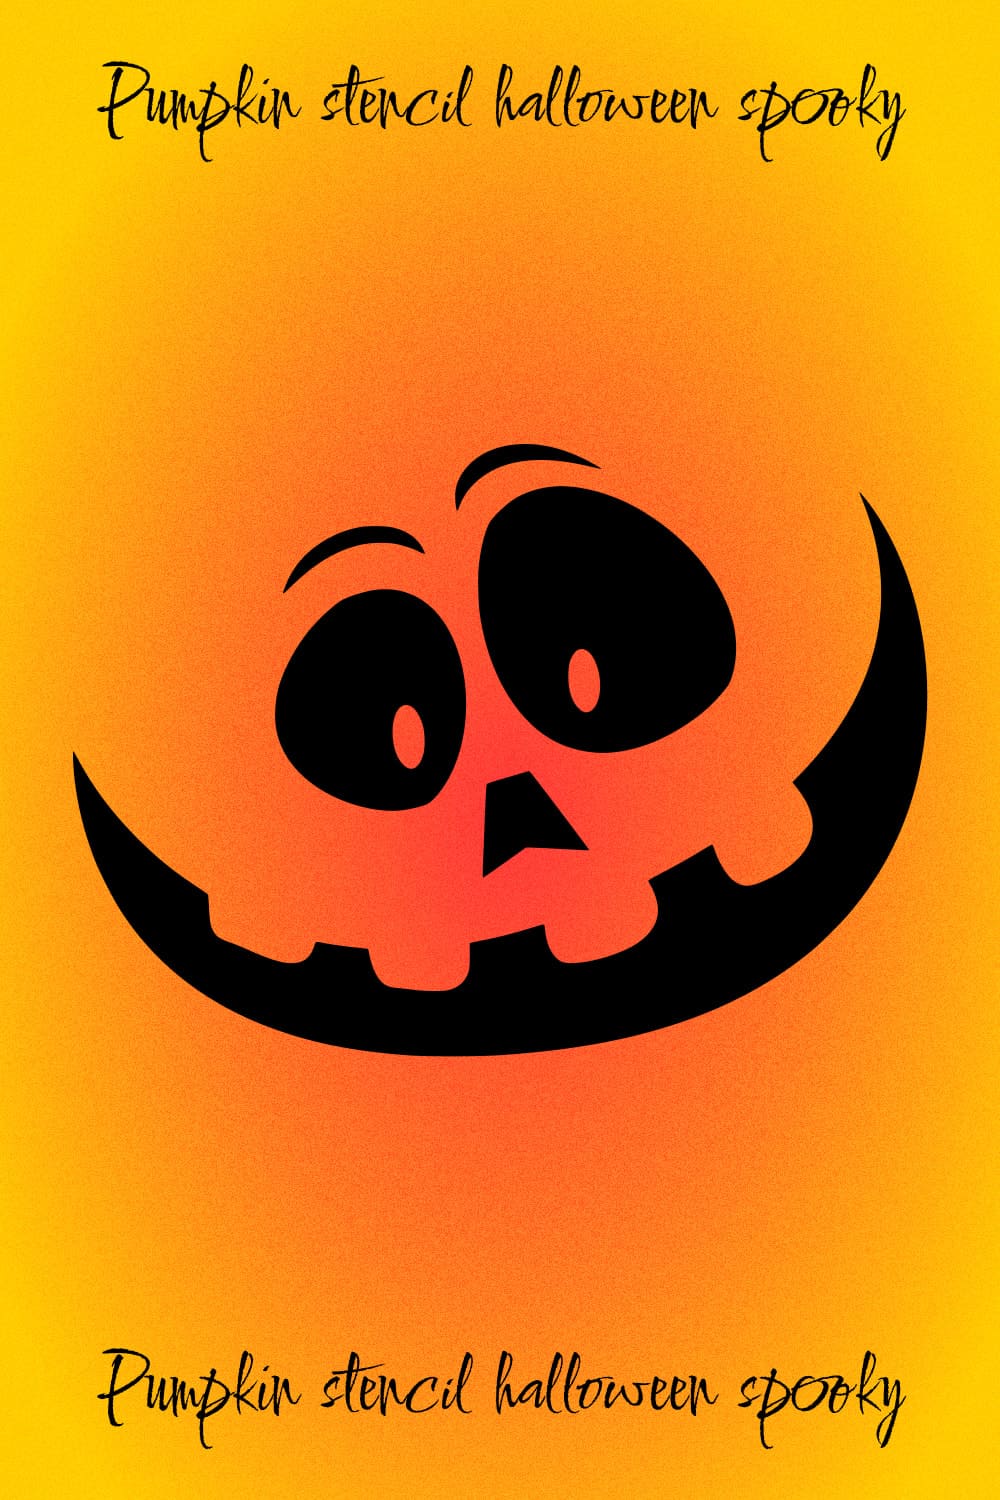 Pumpkin Stencil Halloween Spooky - Pinterest Image.